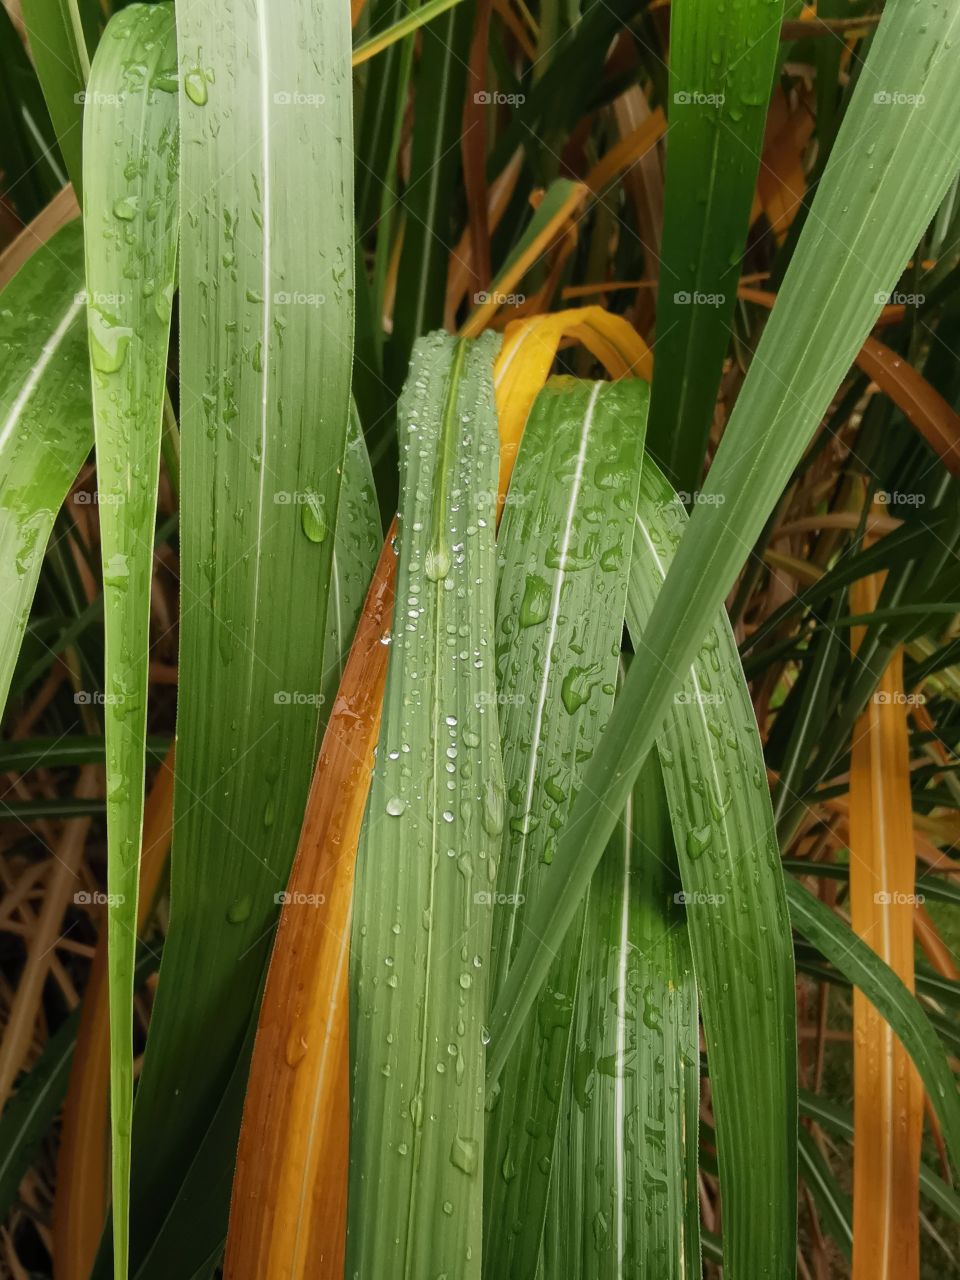 Raindrops on pampas gras